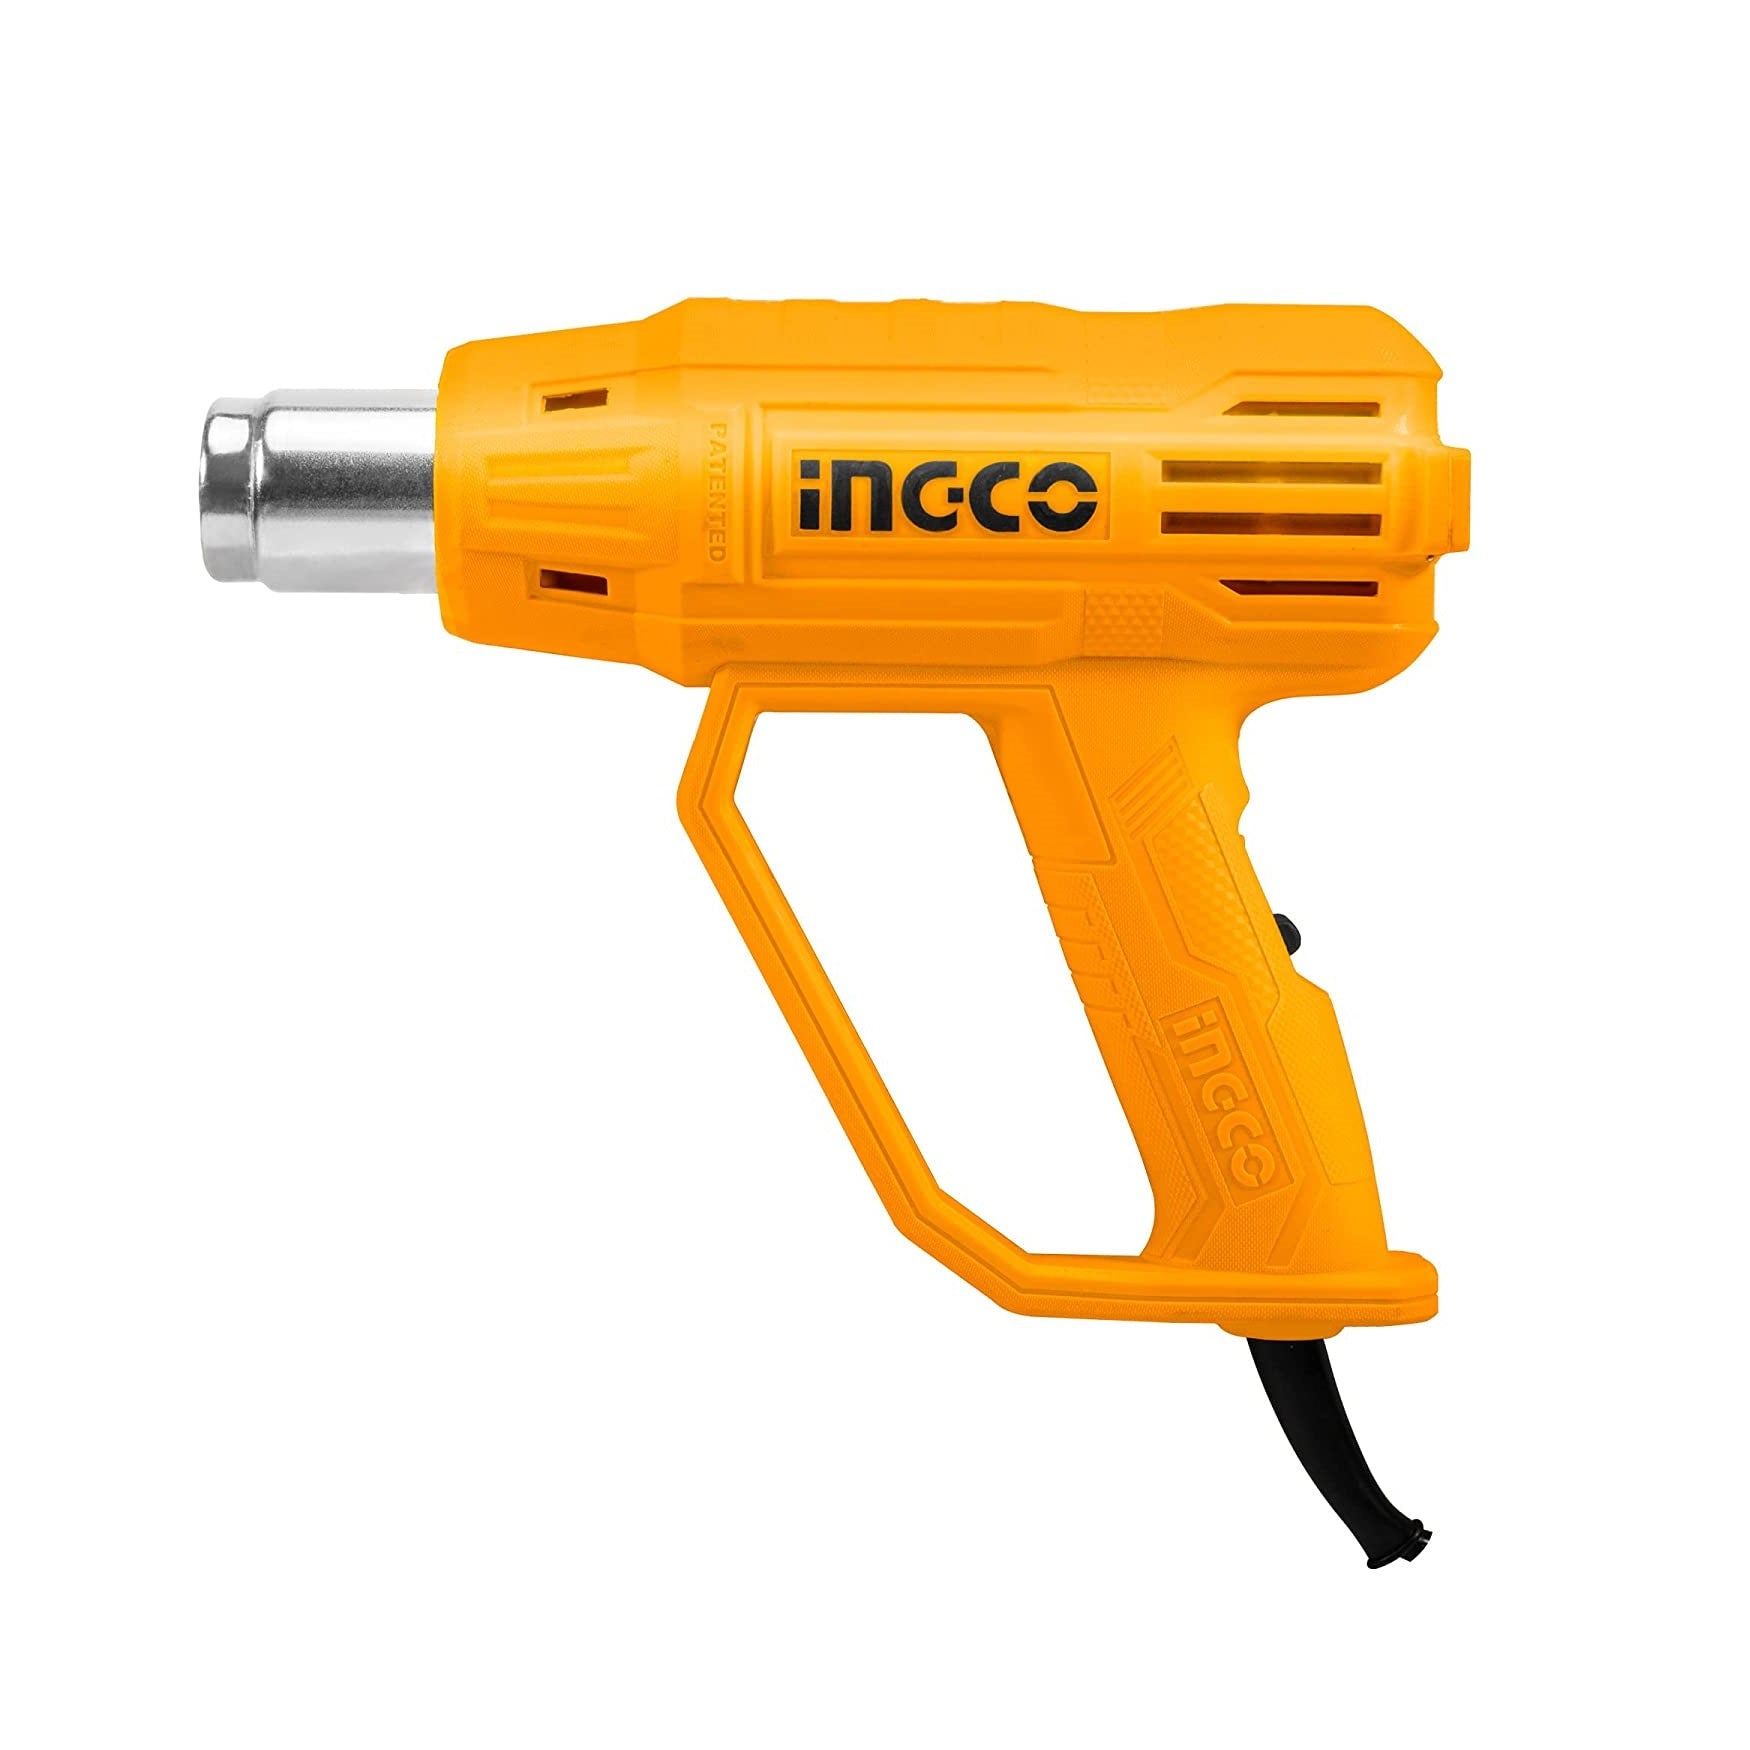 Ingco Heat Gun 2000W with Nozzle HG2000385